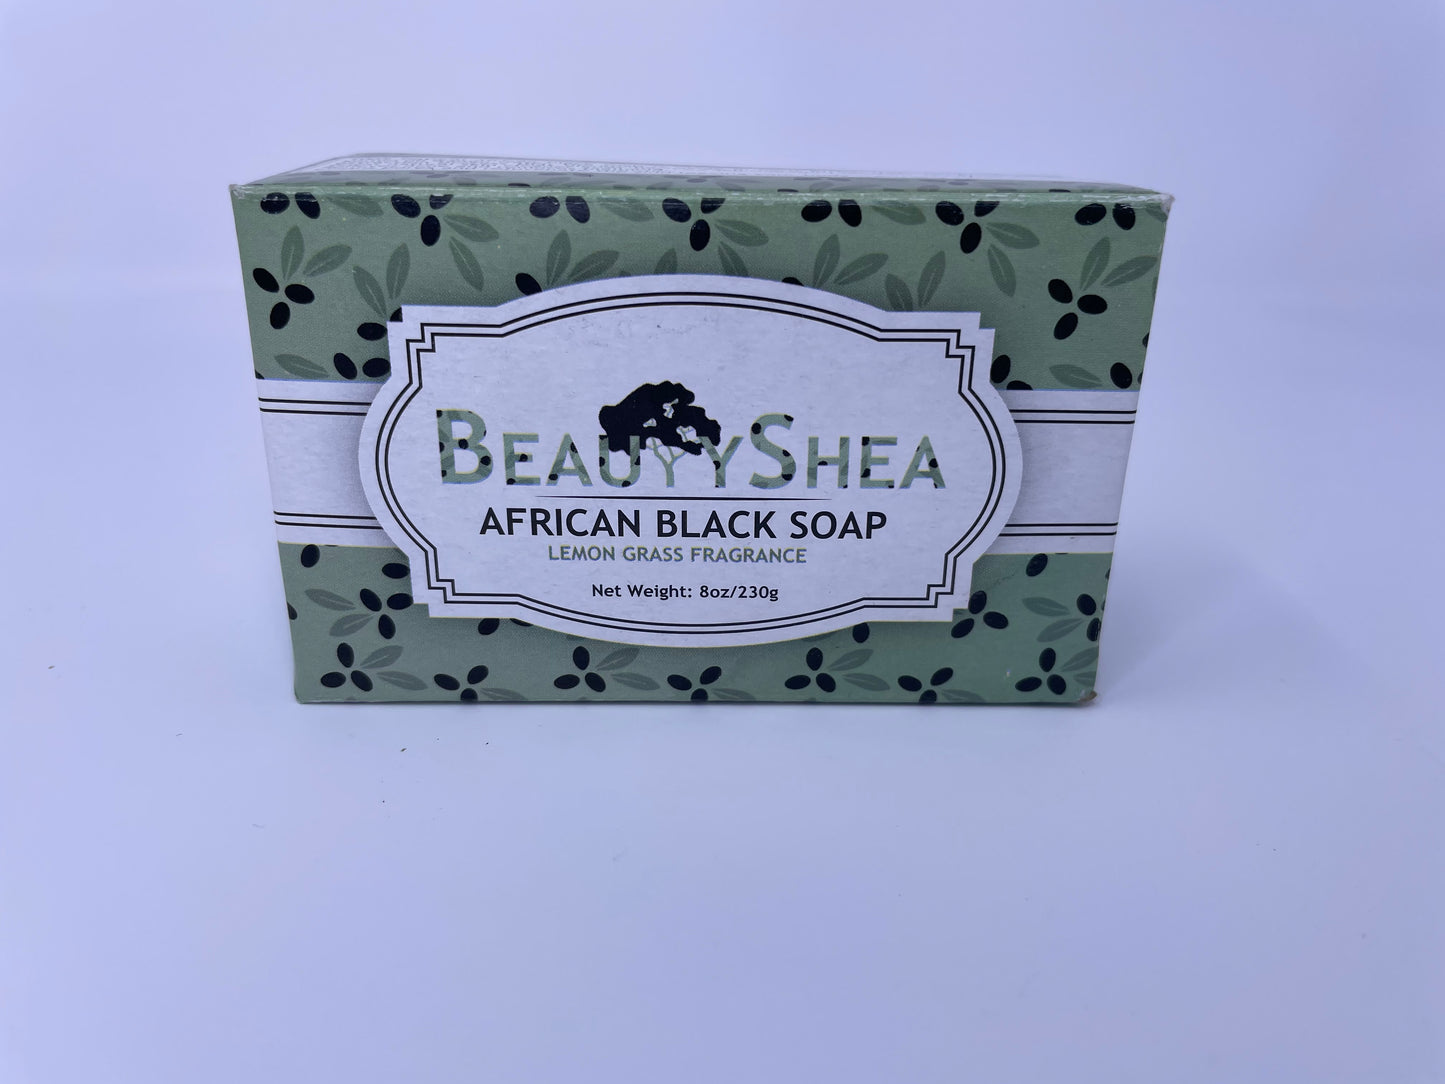 African Black Soap - 8oz bar Raw Organic Soap for Dry Skin, Face & Body Wash